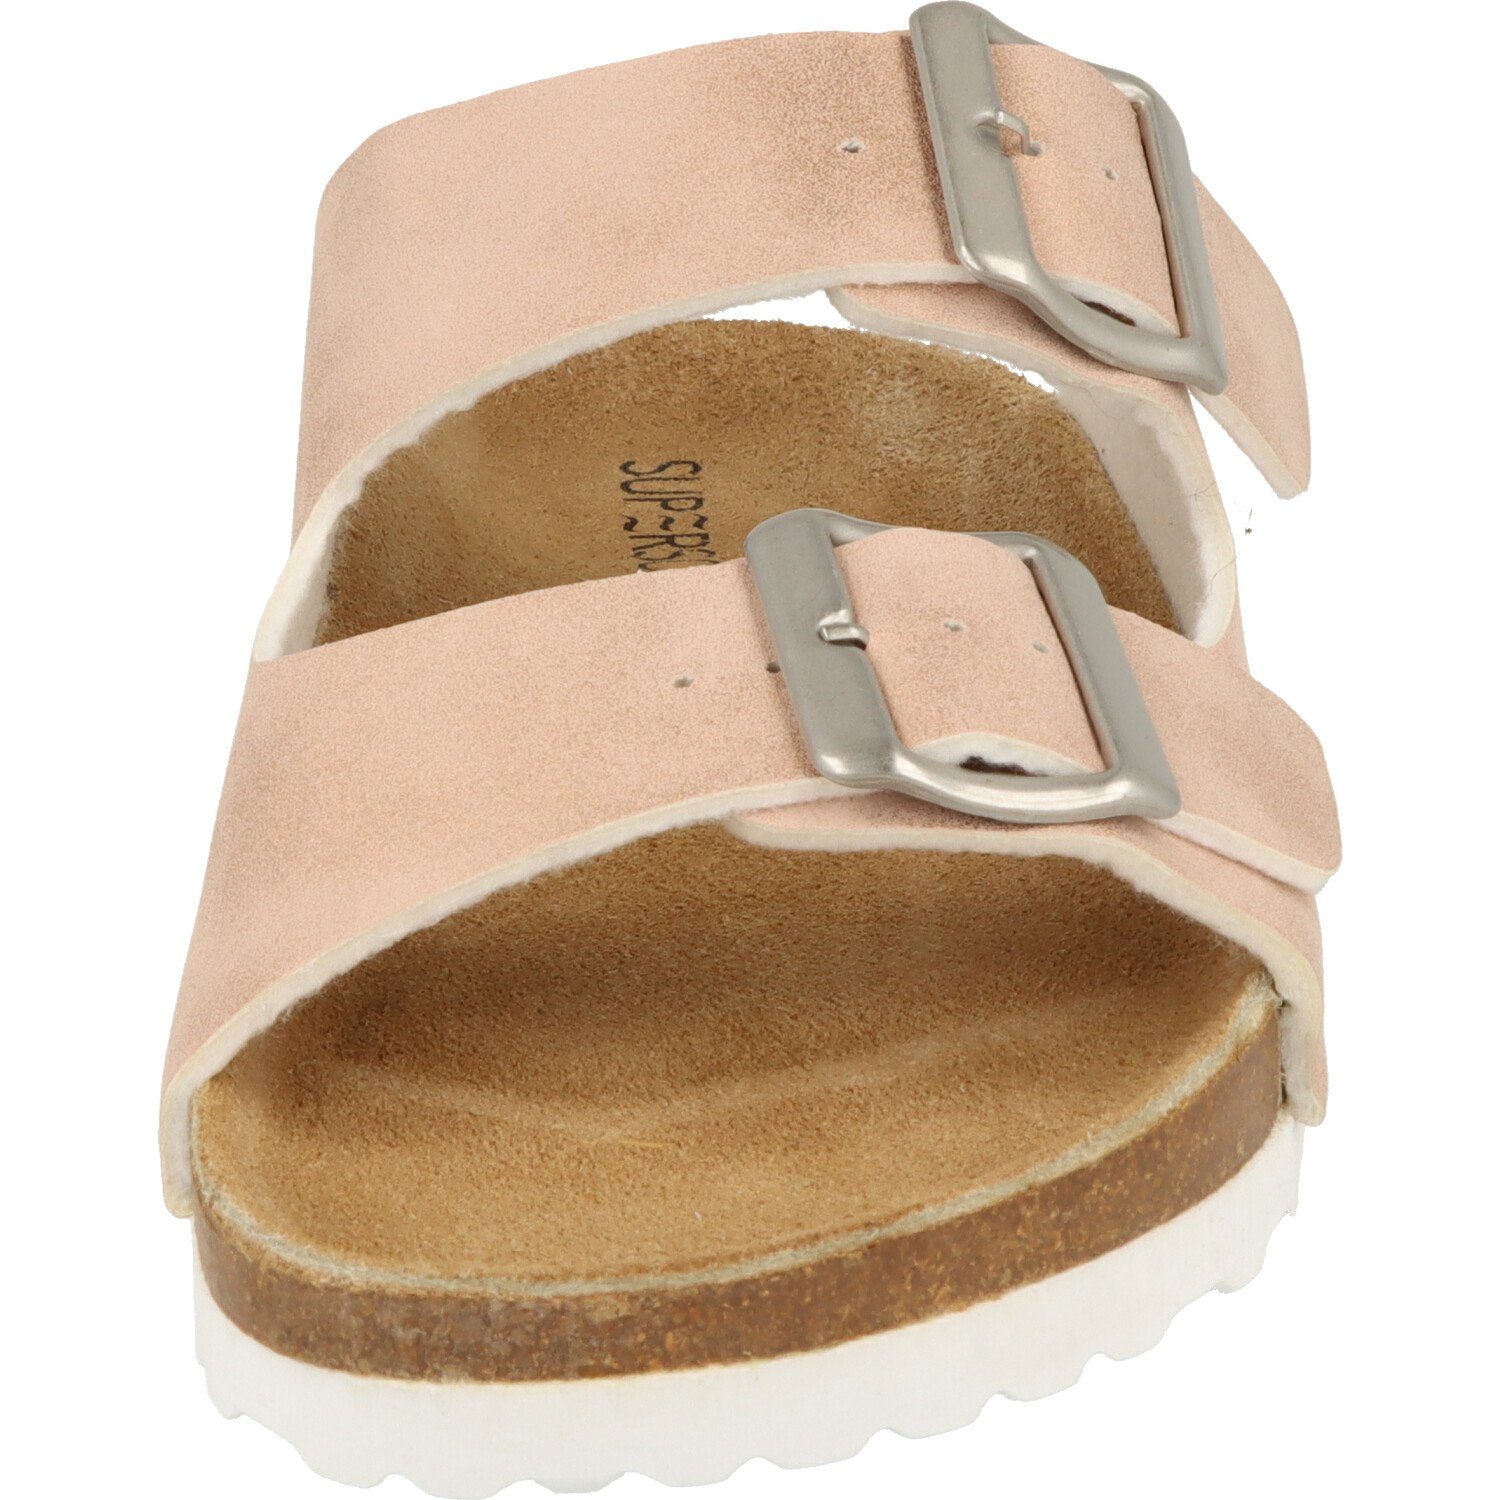 verstellbare Komfort Sandale Schuhe SUPERSOFT Schnallen Damen Pantolette 274-616 Lederfußbett